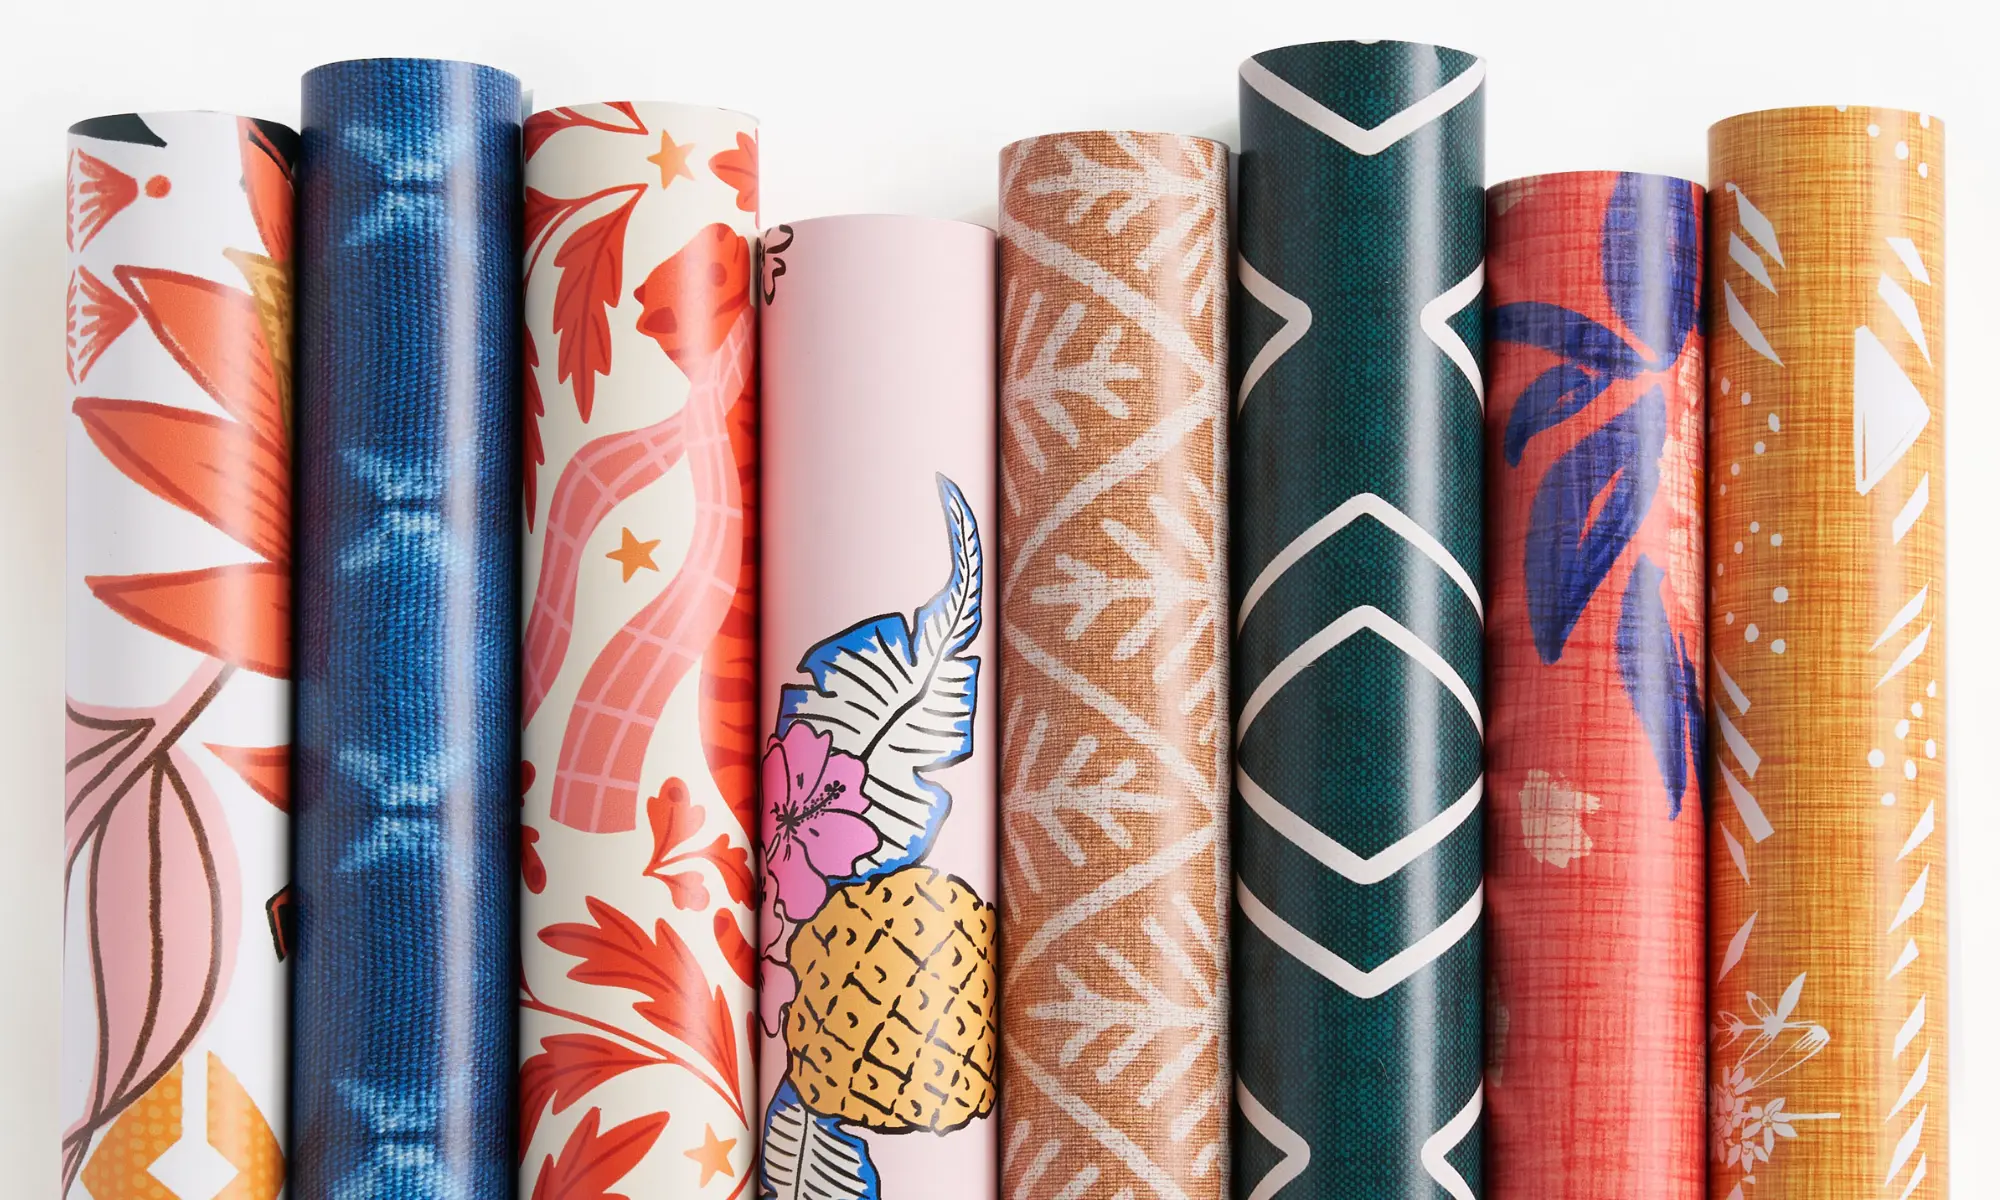 wallpaper rolls in various designs